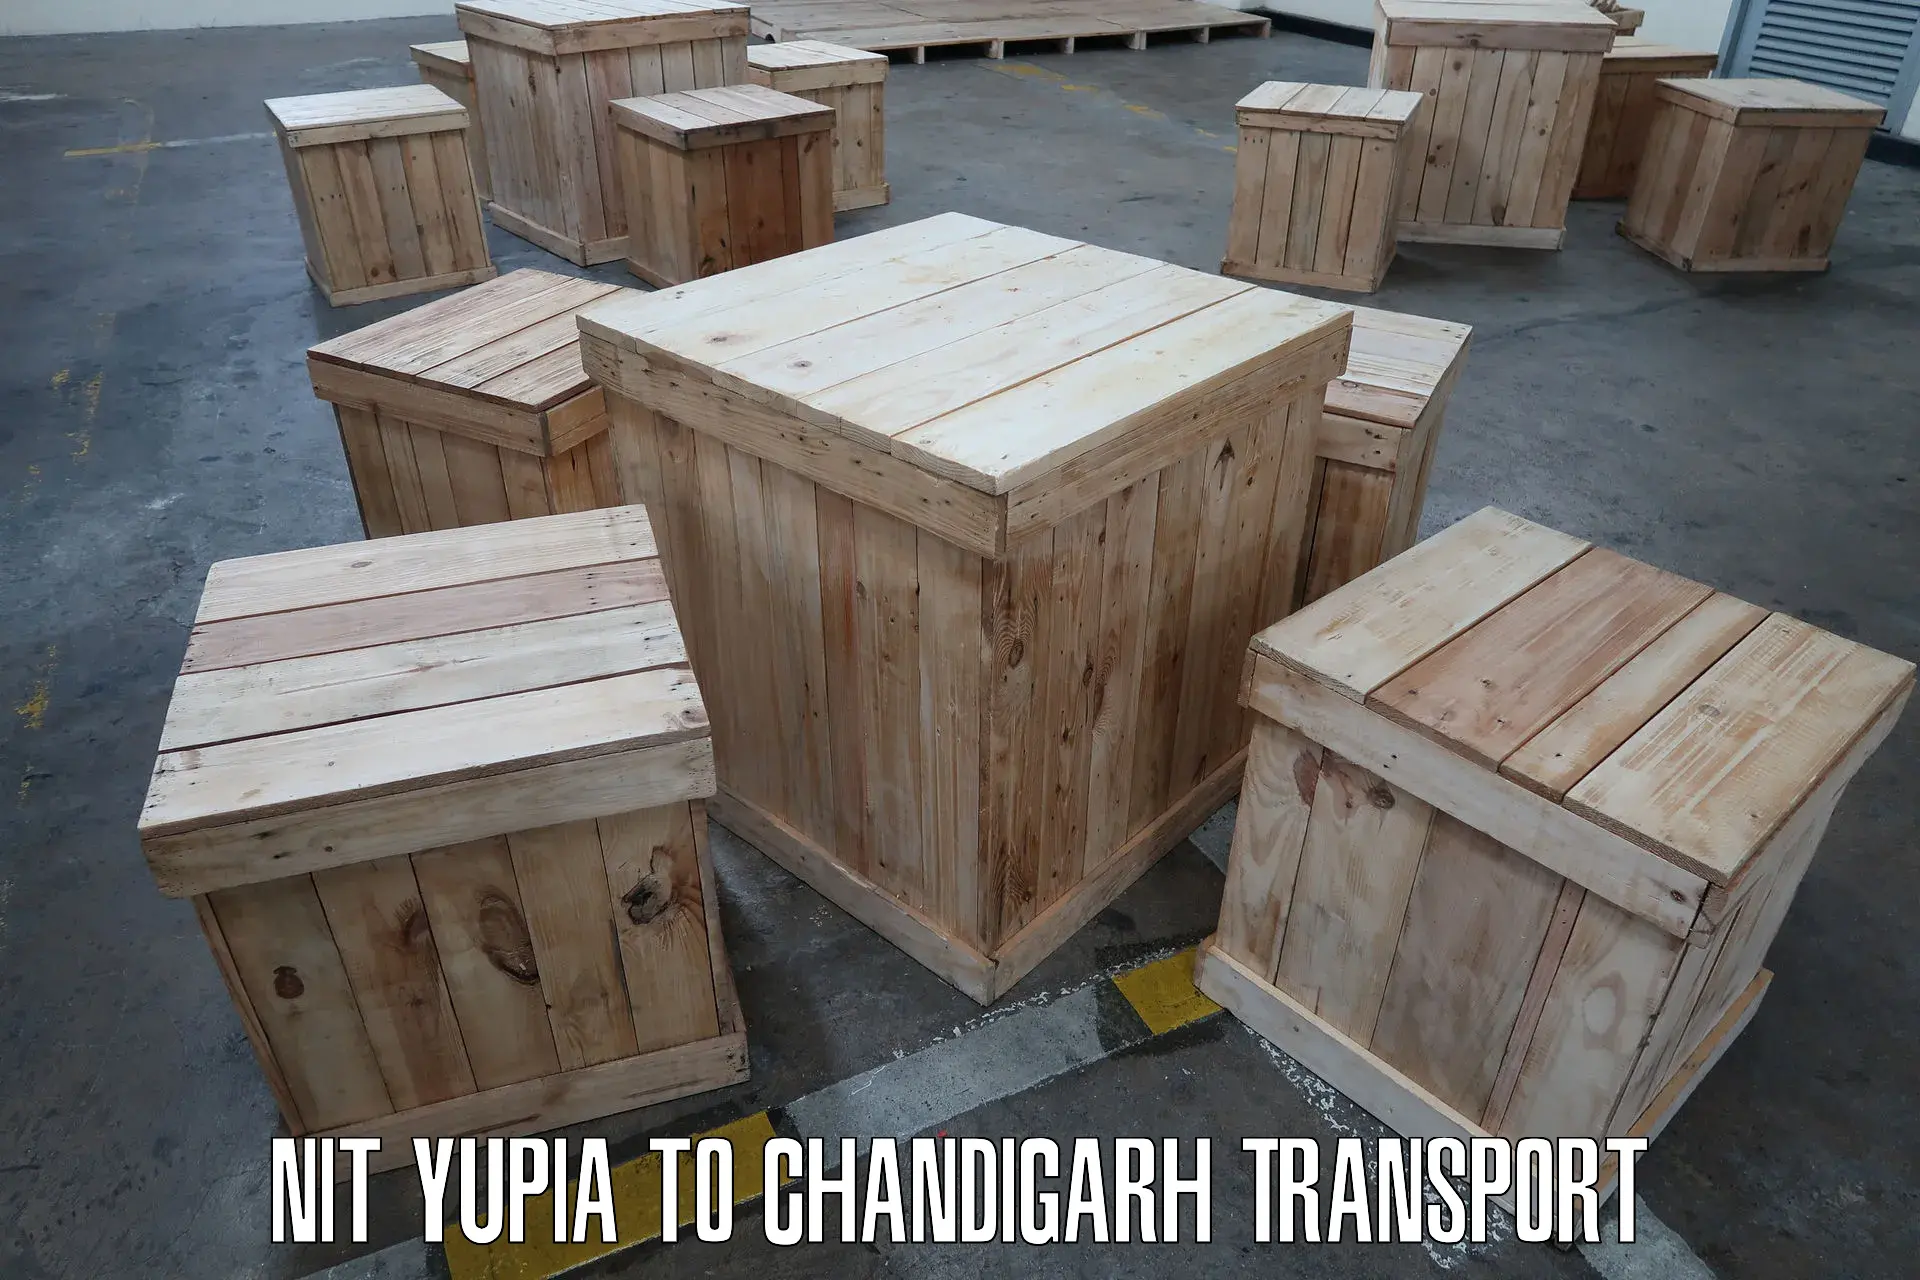 Bike transport service NIT Yupia to Chandigarh